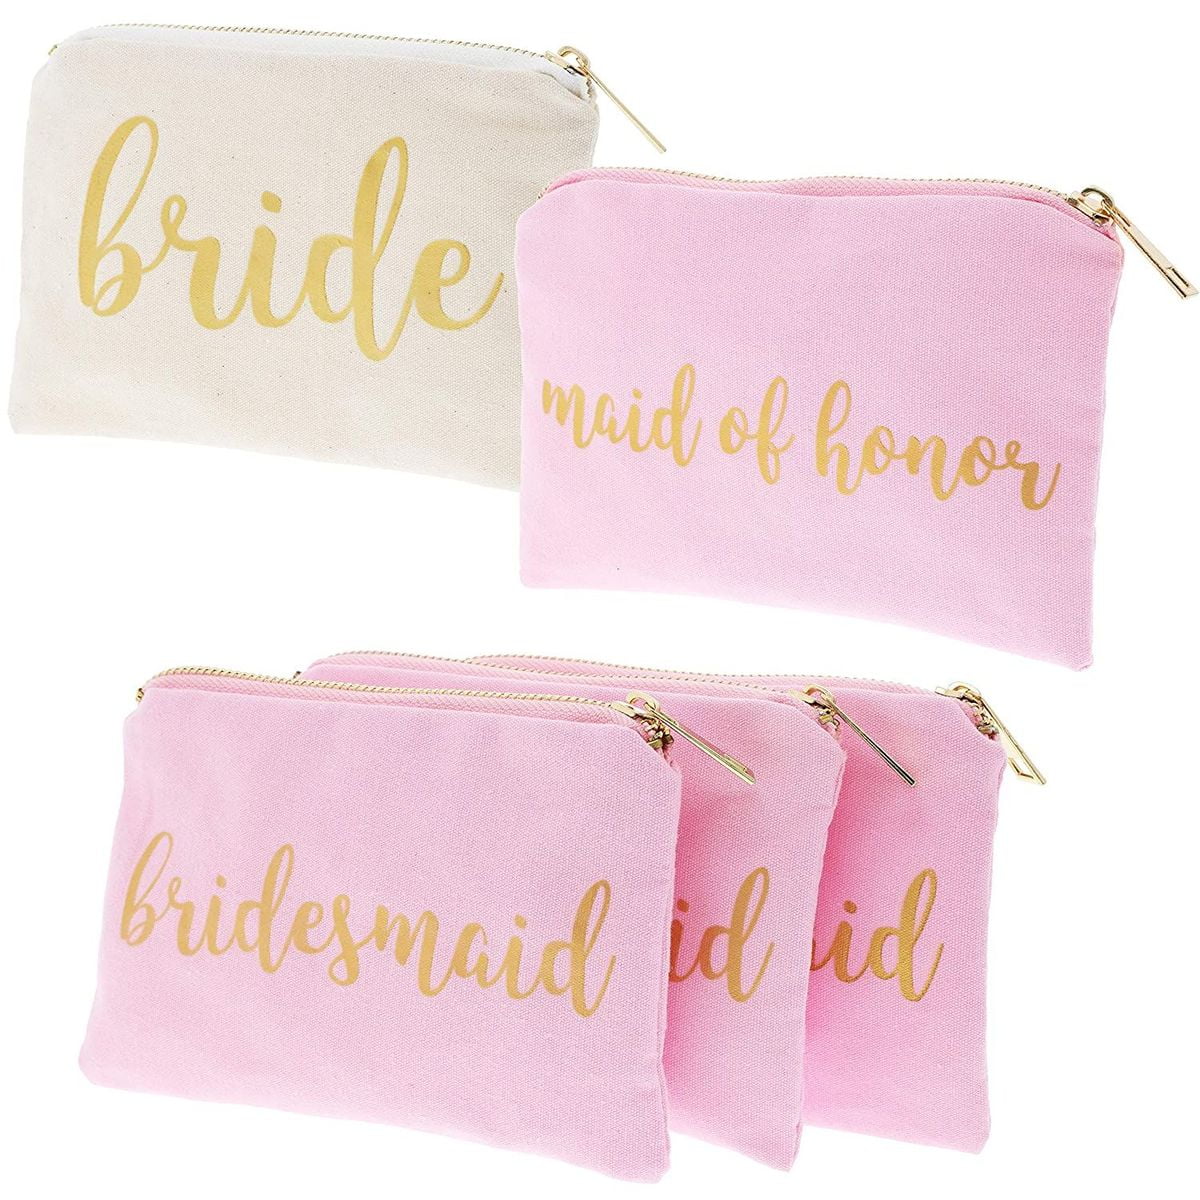 Add Text Bridesmaid Gifts Custom Makeup Bag Bridal Shower Gifts in bulk Bridesmaid Proposal Bag Maid of Honor Gifts 